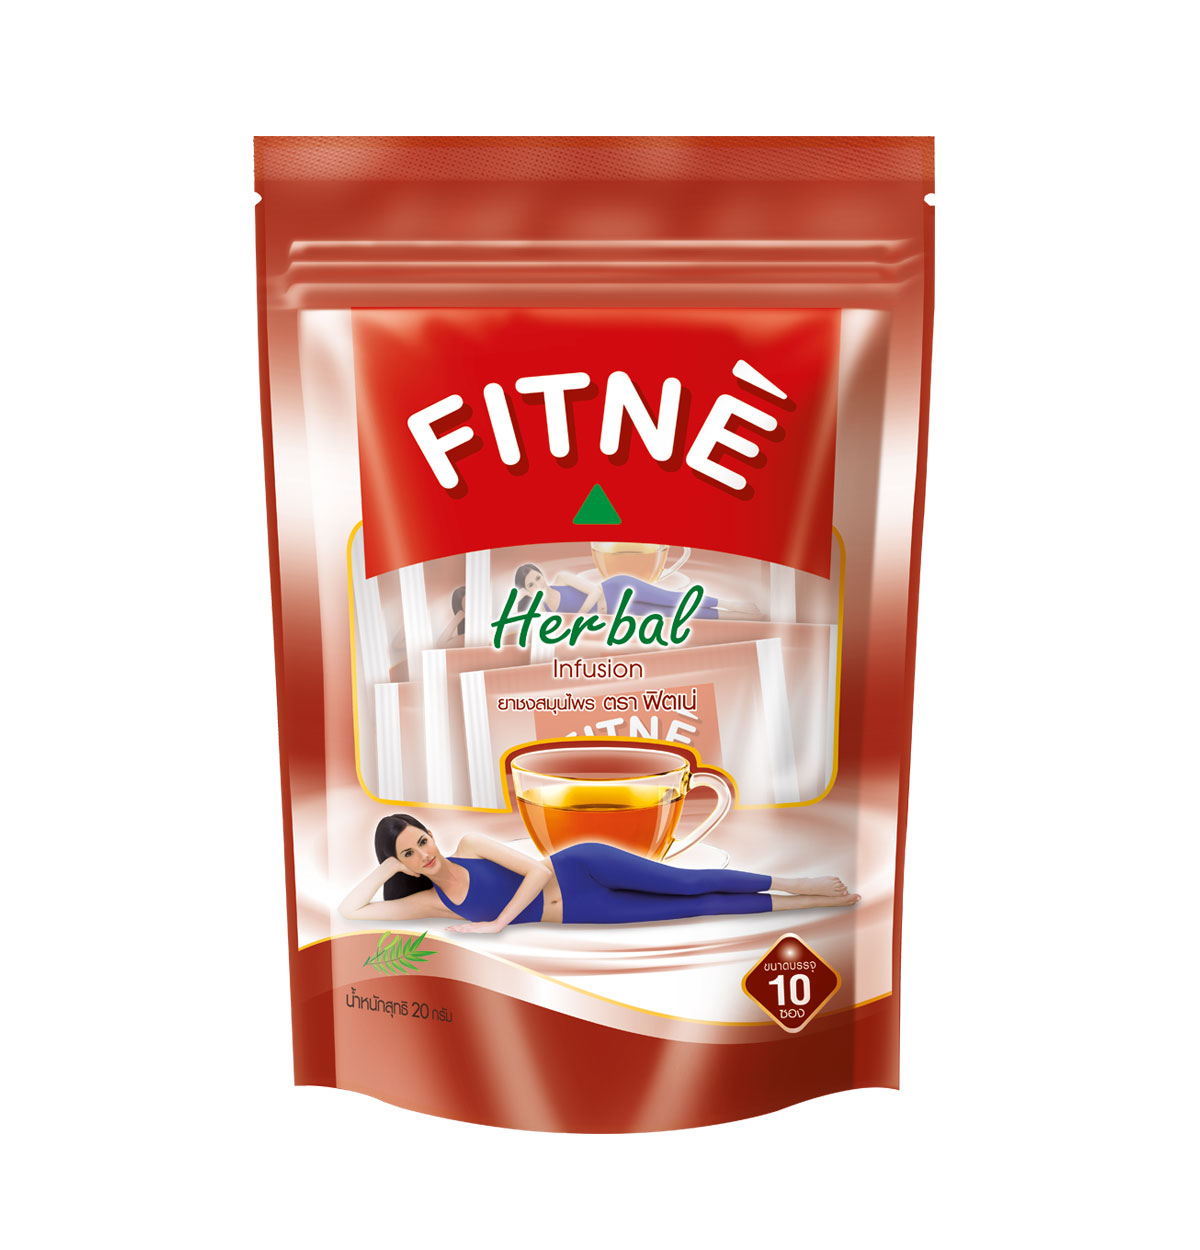 FITNE' Herbal Tea Original Flavored 2 g.x10 Sachets